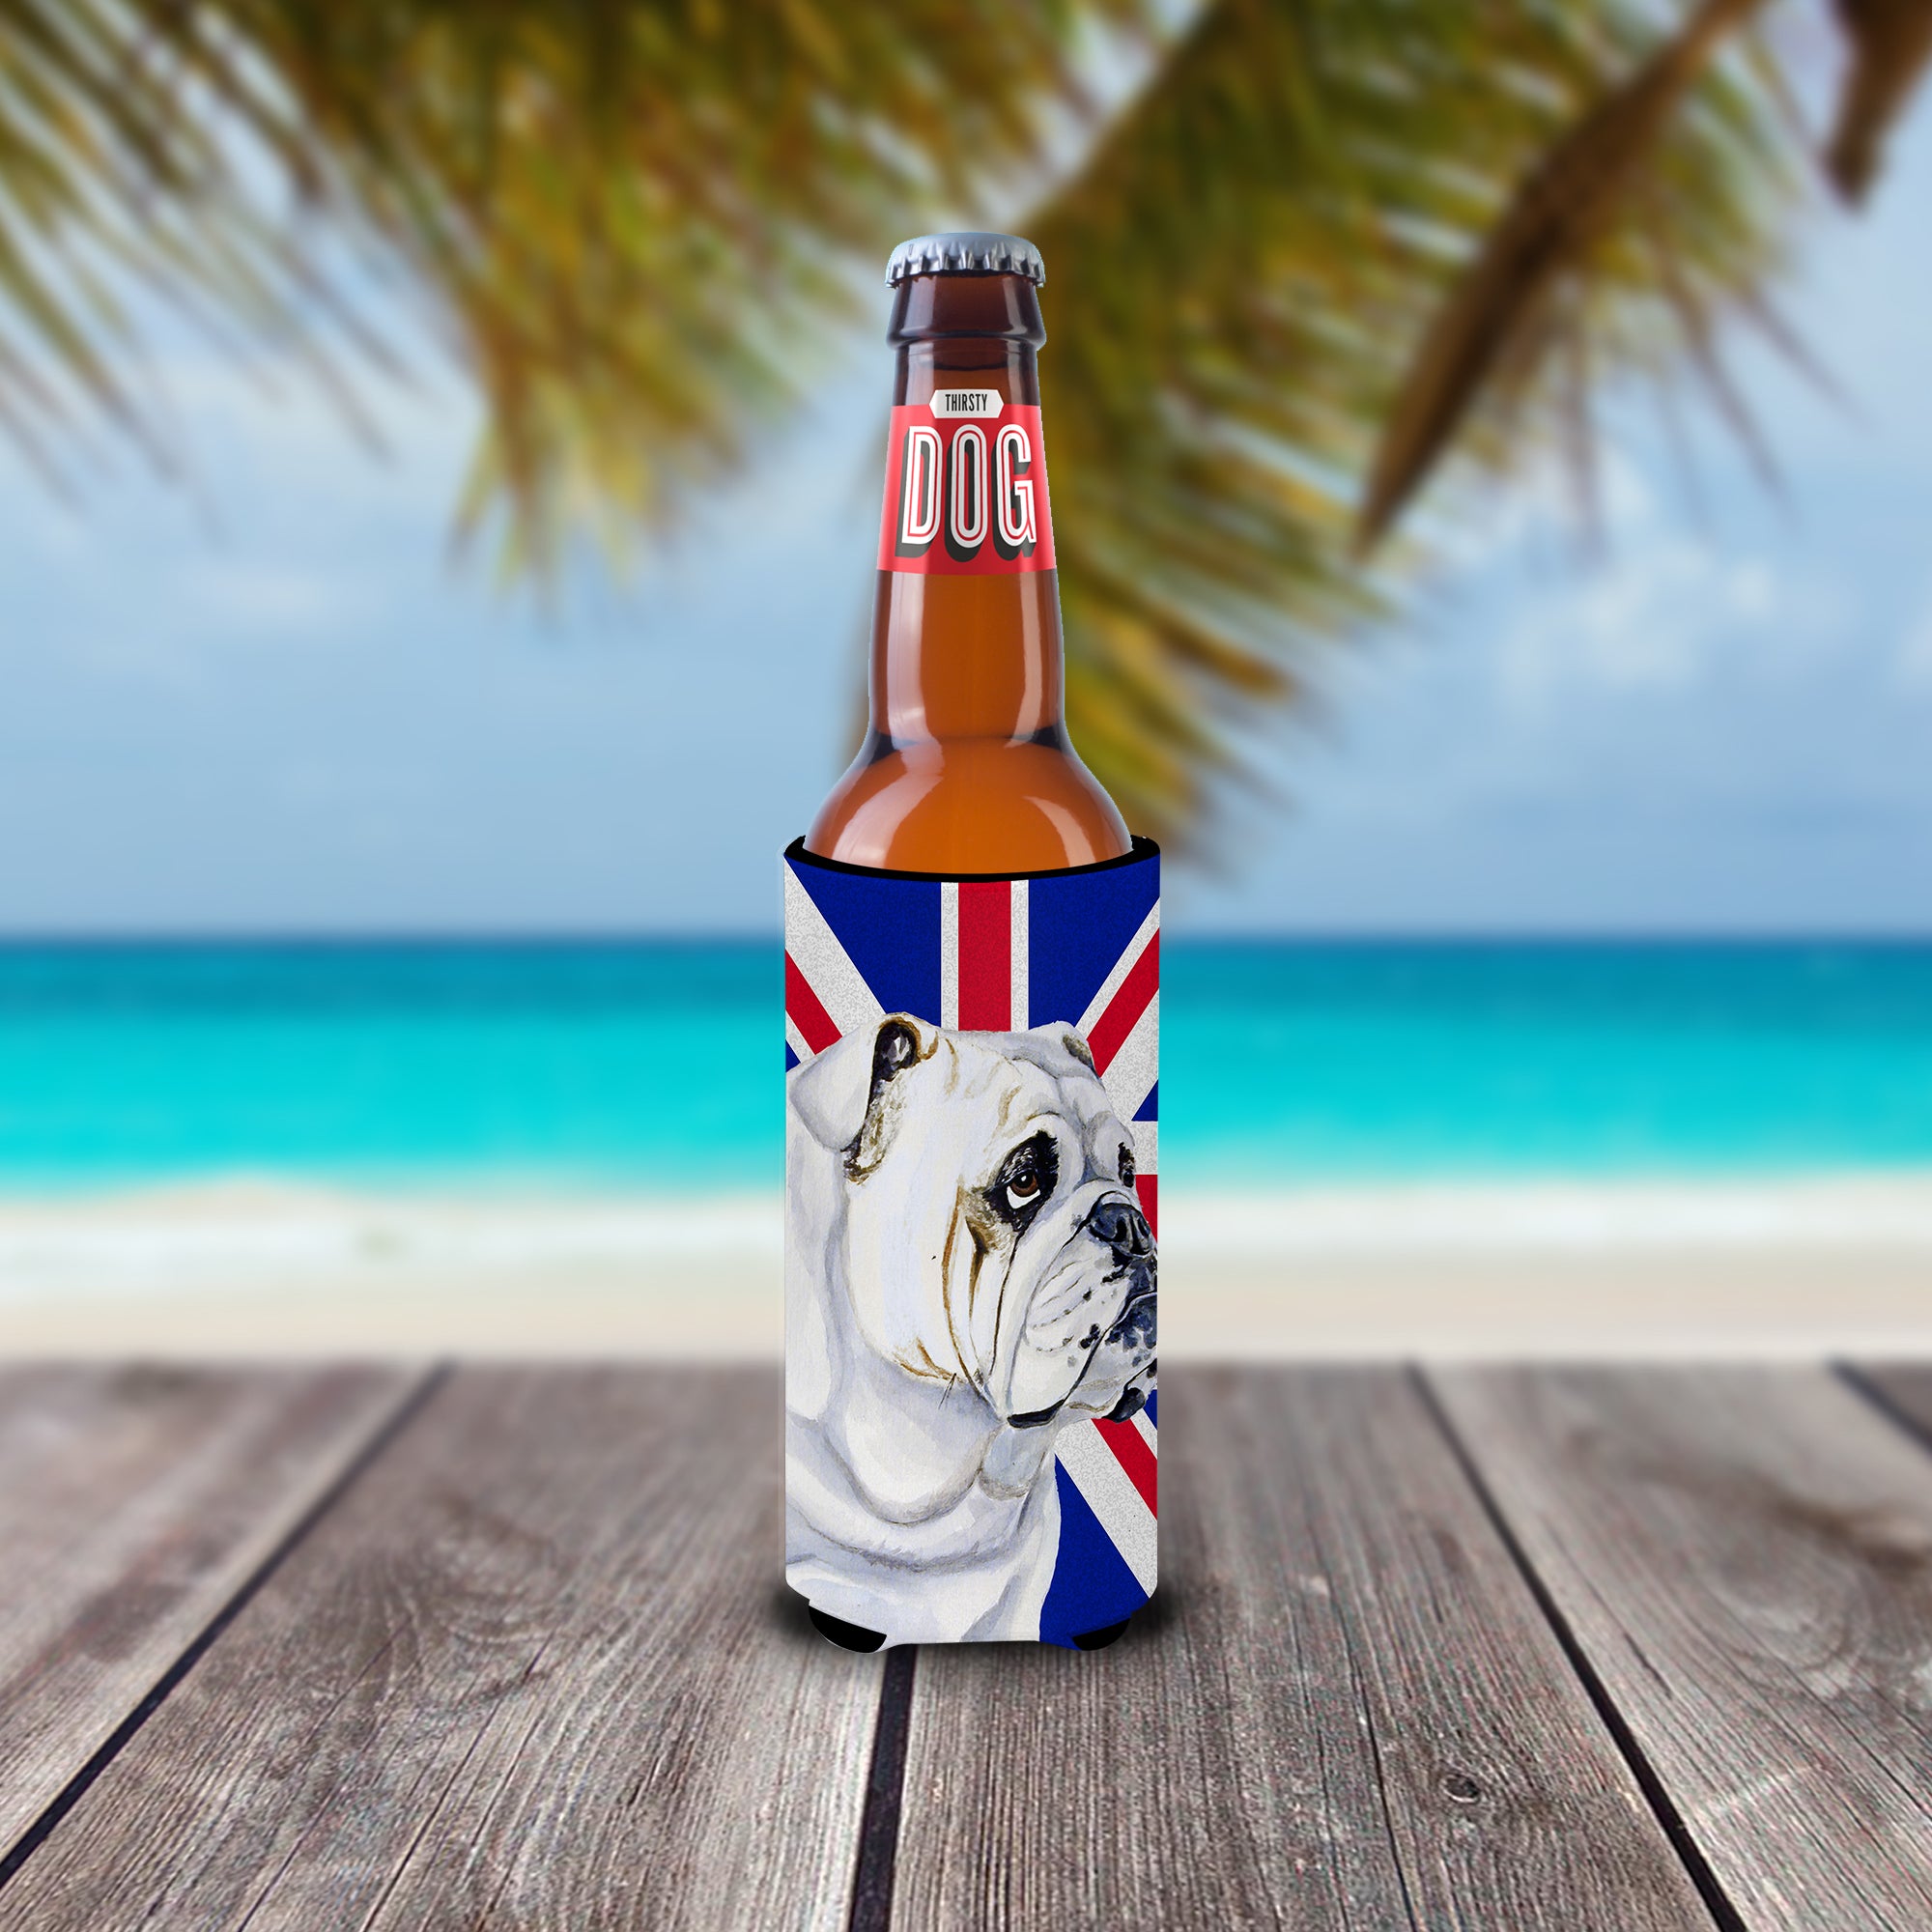 English Bulldog with English Union Jack British Flag Ultra Beverage Insulators for slim cans LH9471MUK